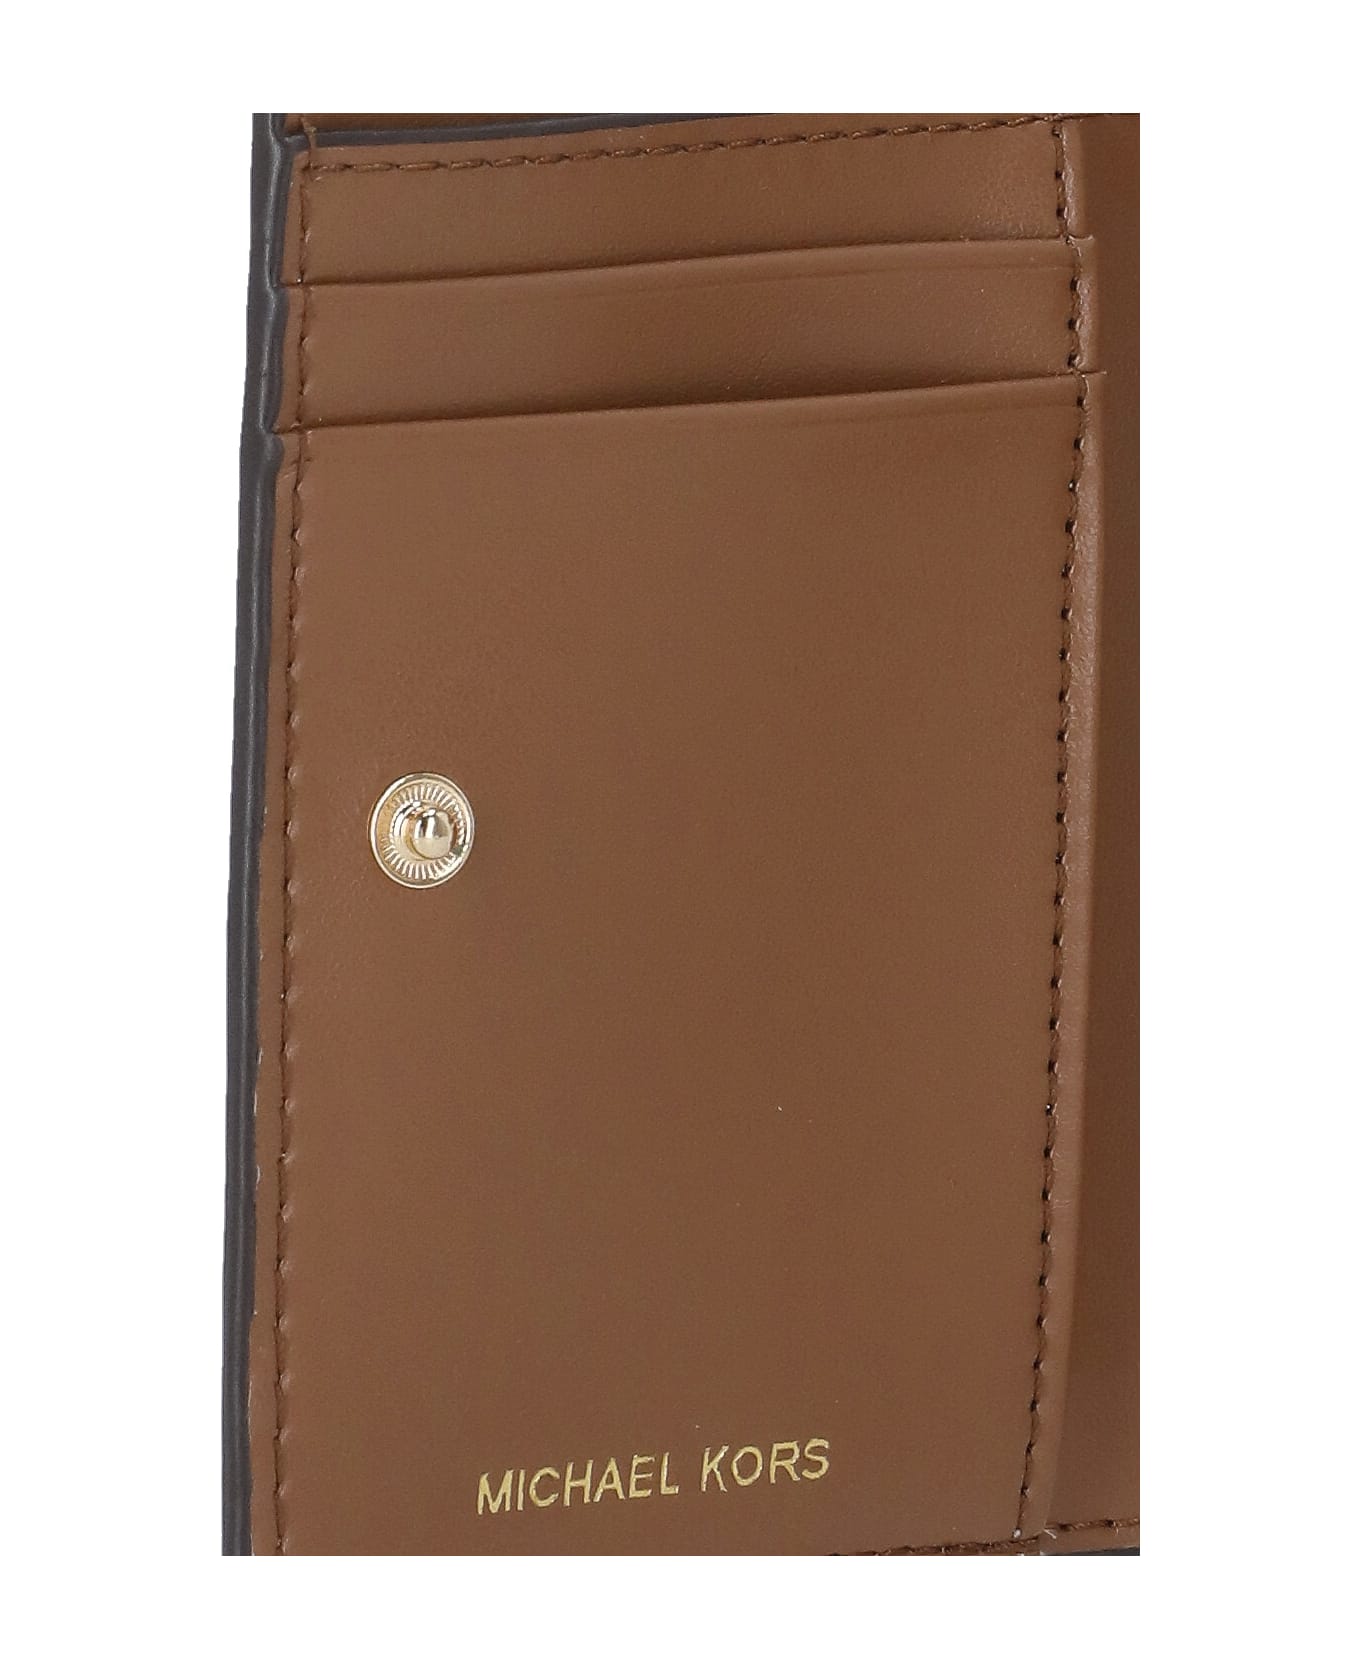 Michael Kors Jet Set Snap Billfold Wallet - Luggage